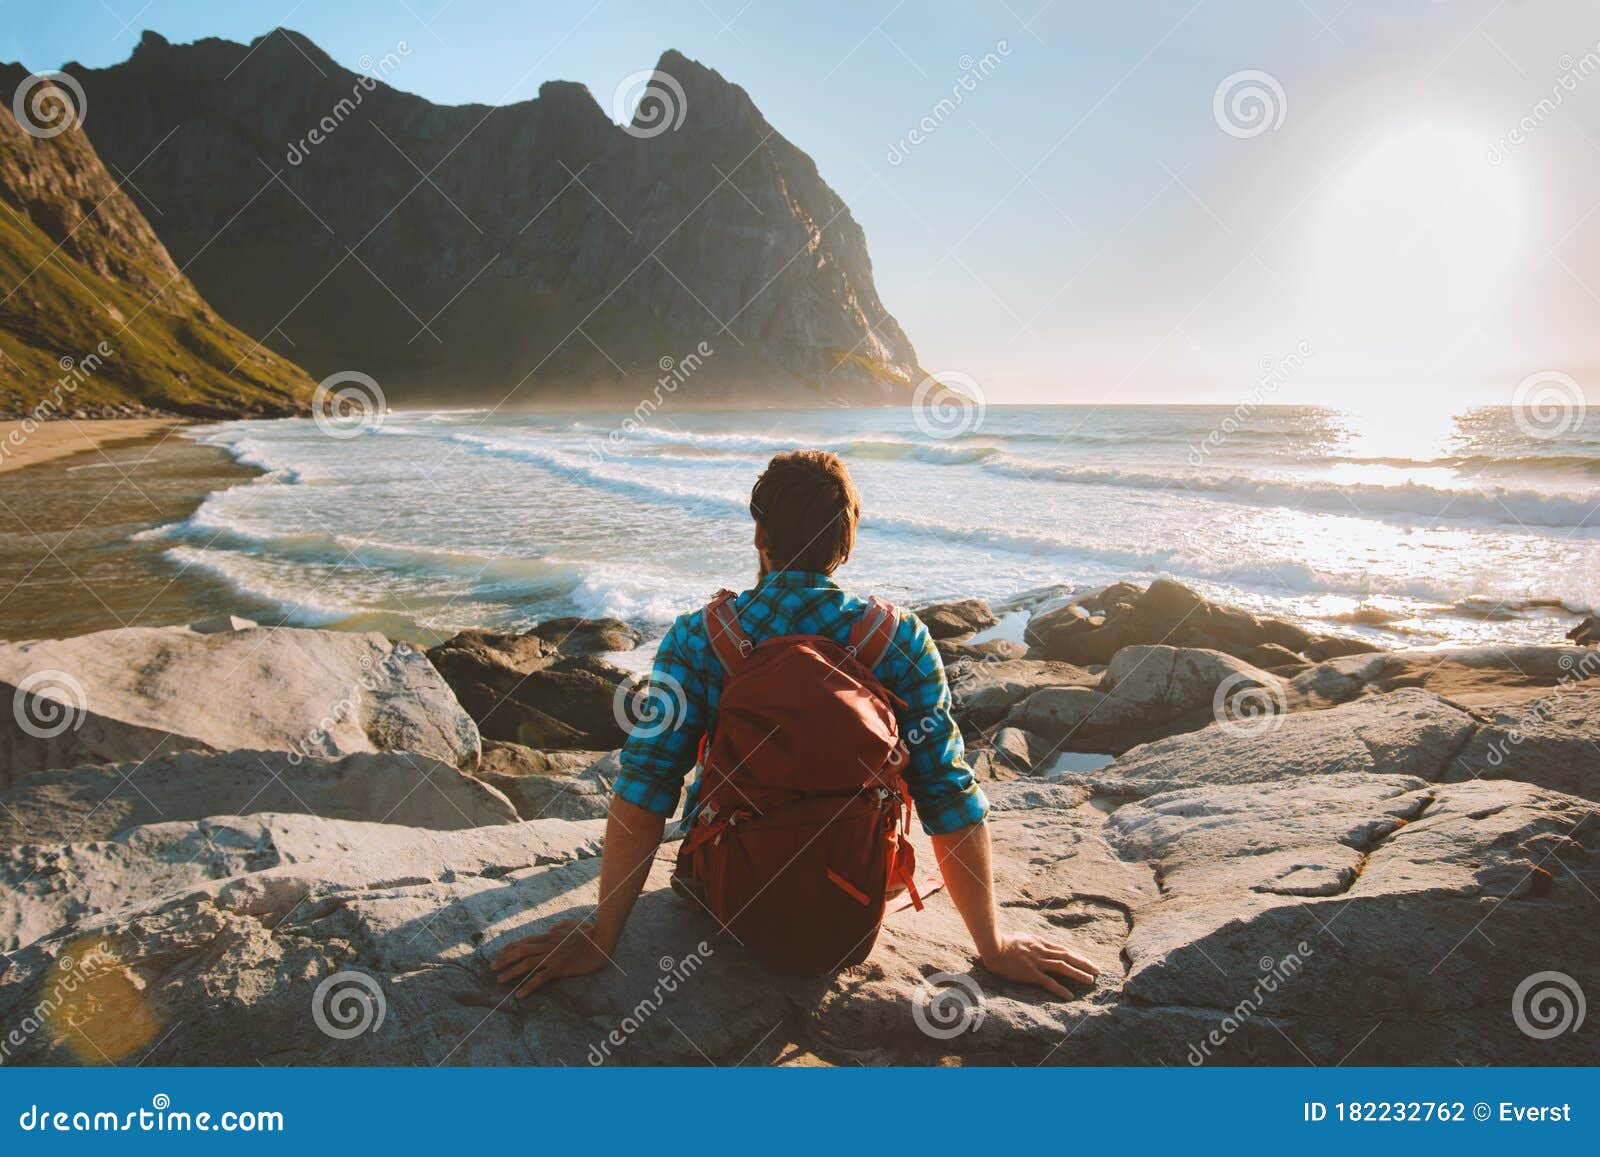 man sitting on kvalvika beach enjoying ocean view travel vacations eco tourism